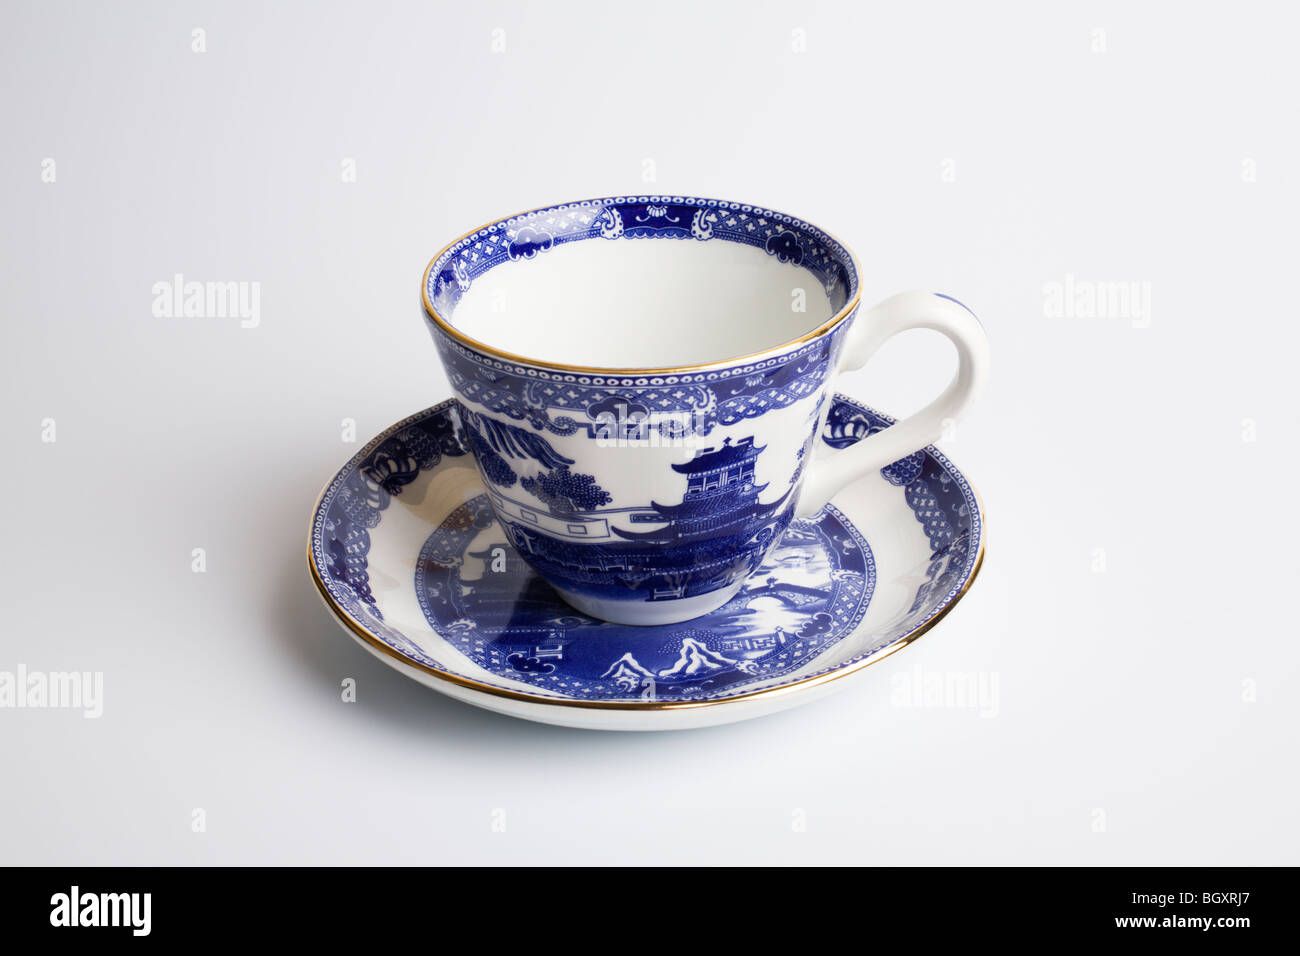 https://c8.alamy.com/comp/BGXRJ7/willow-pattern-cup-saucer-by-wade-ceramics-BGXRJ7.jpg